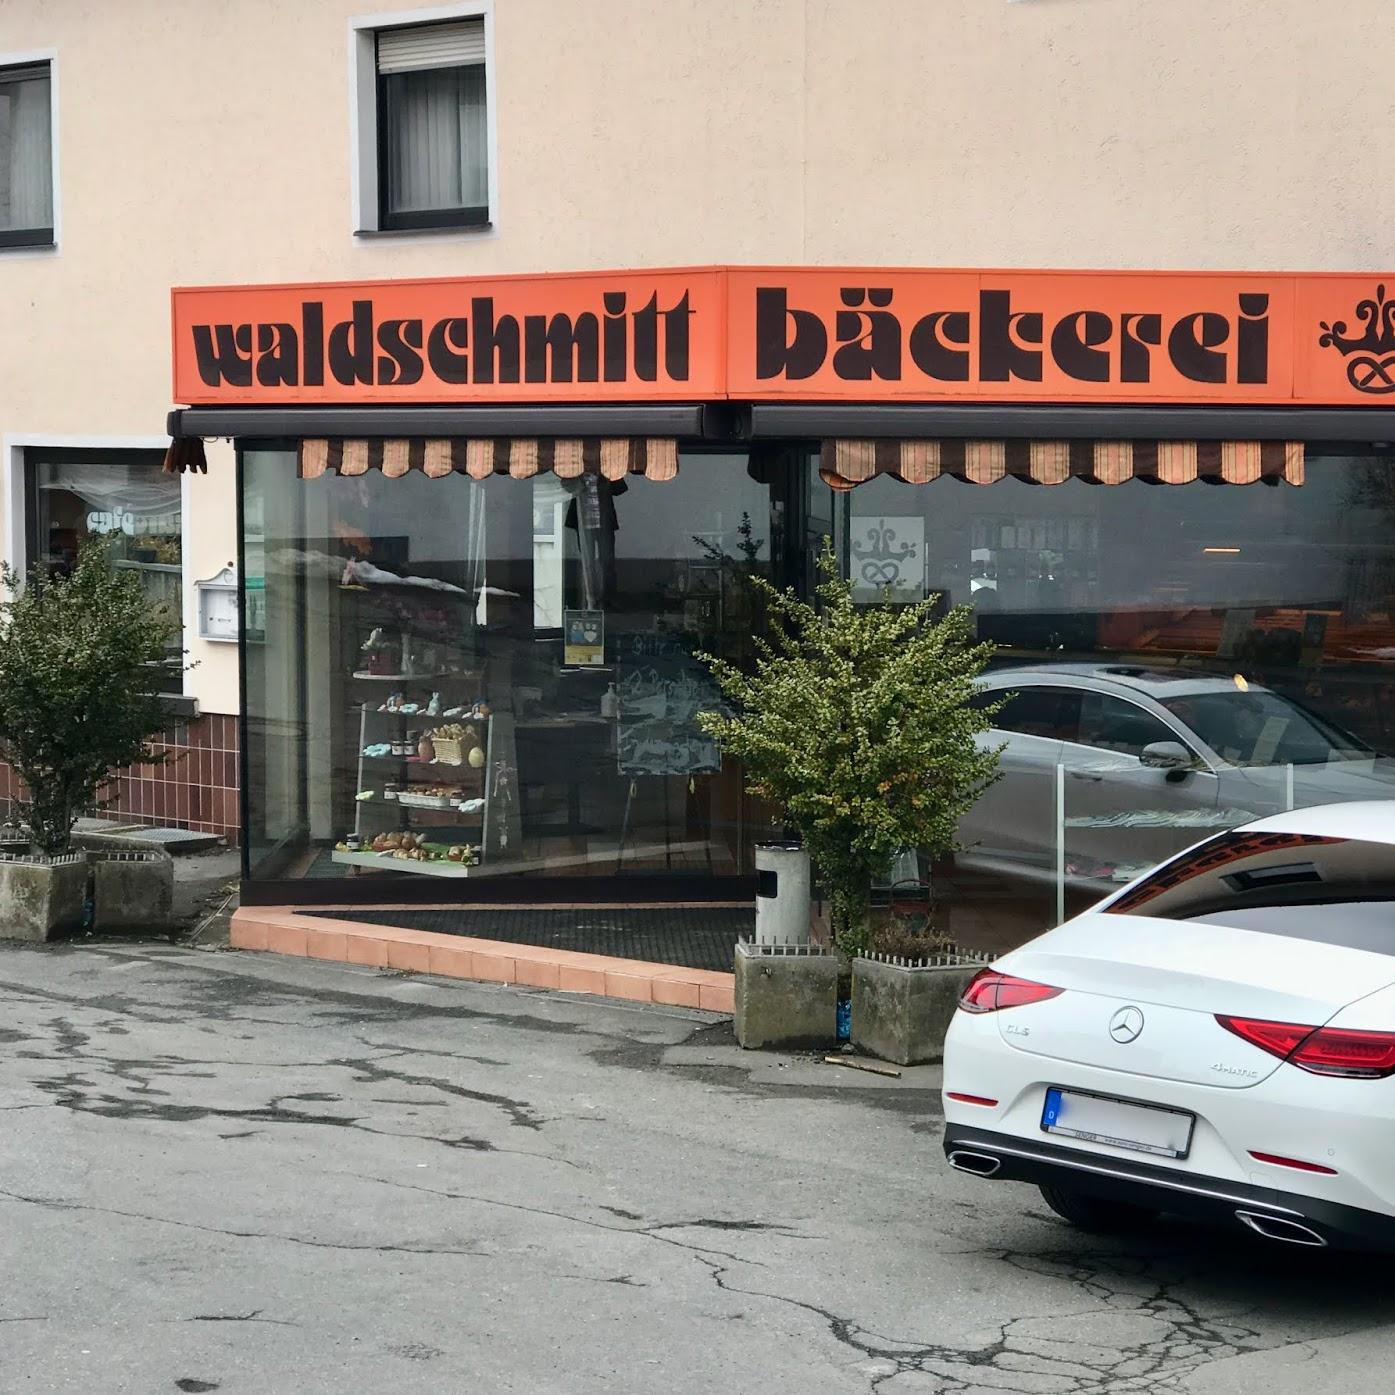 Restaurant "Christof Waldschmitt" in Schmitten